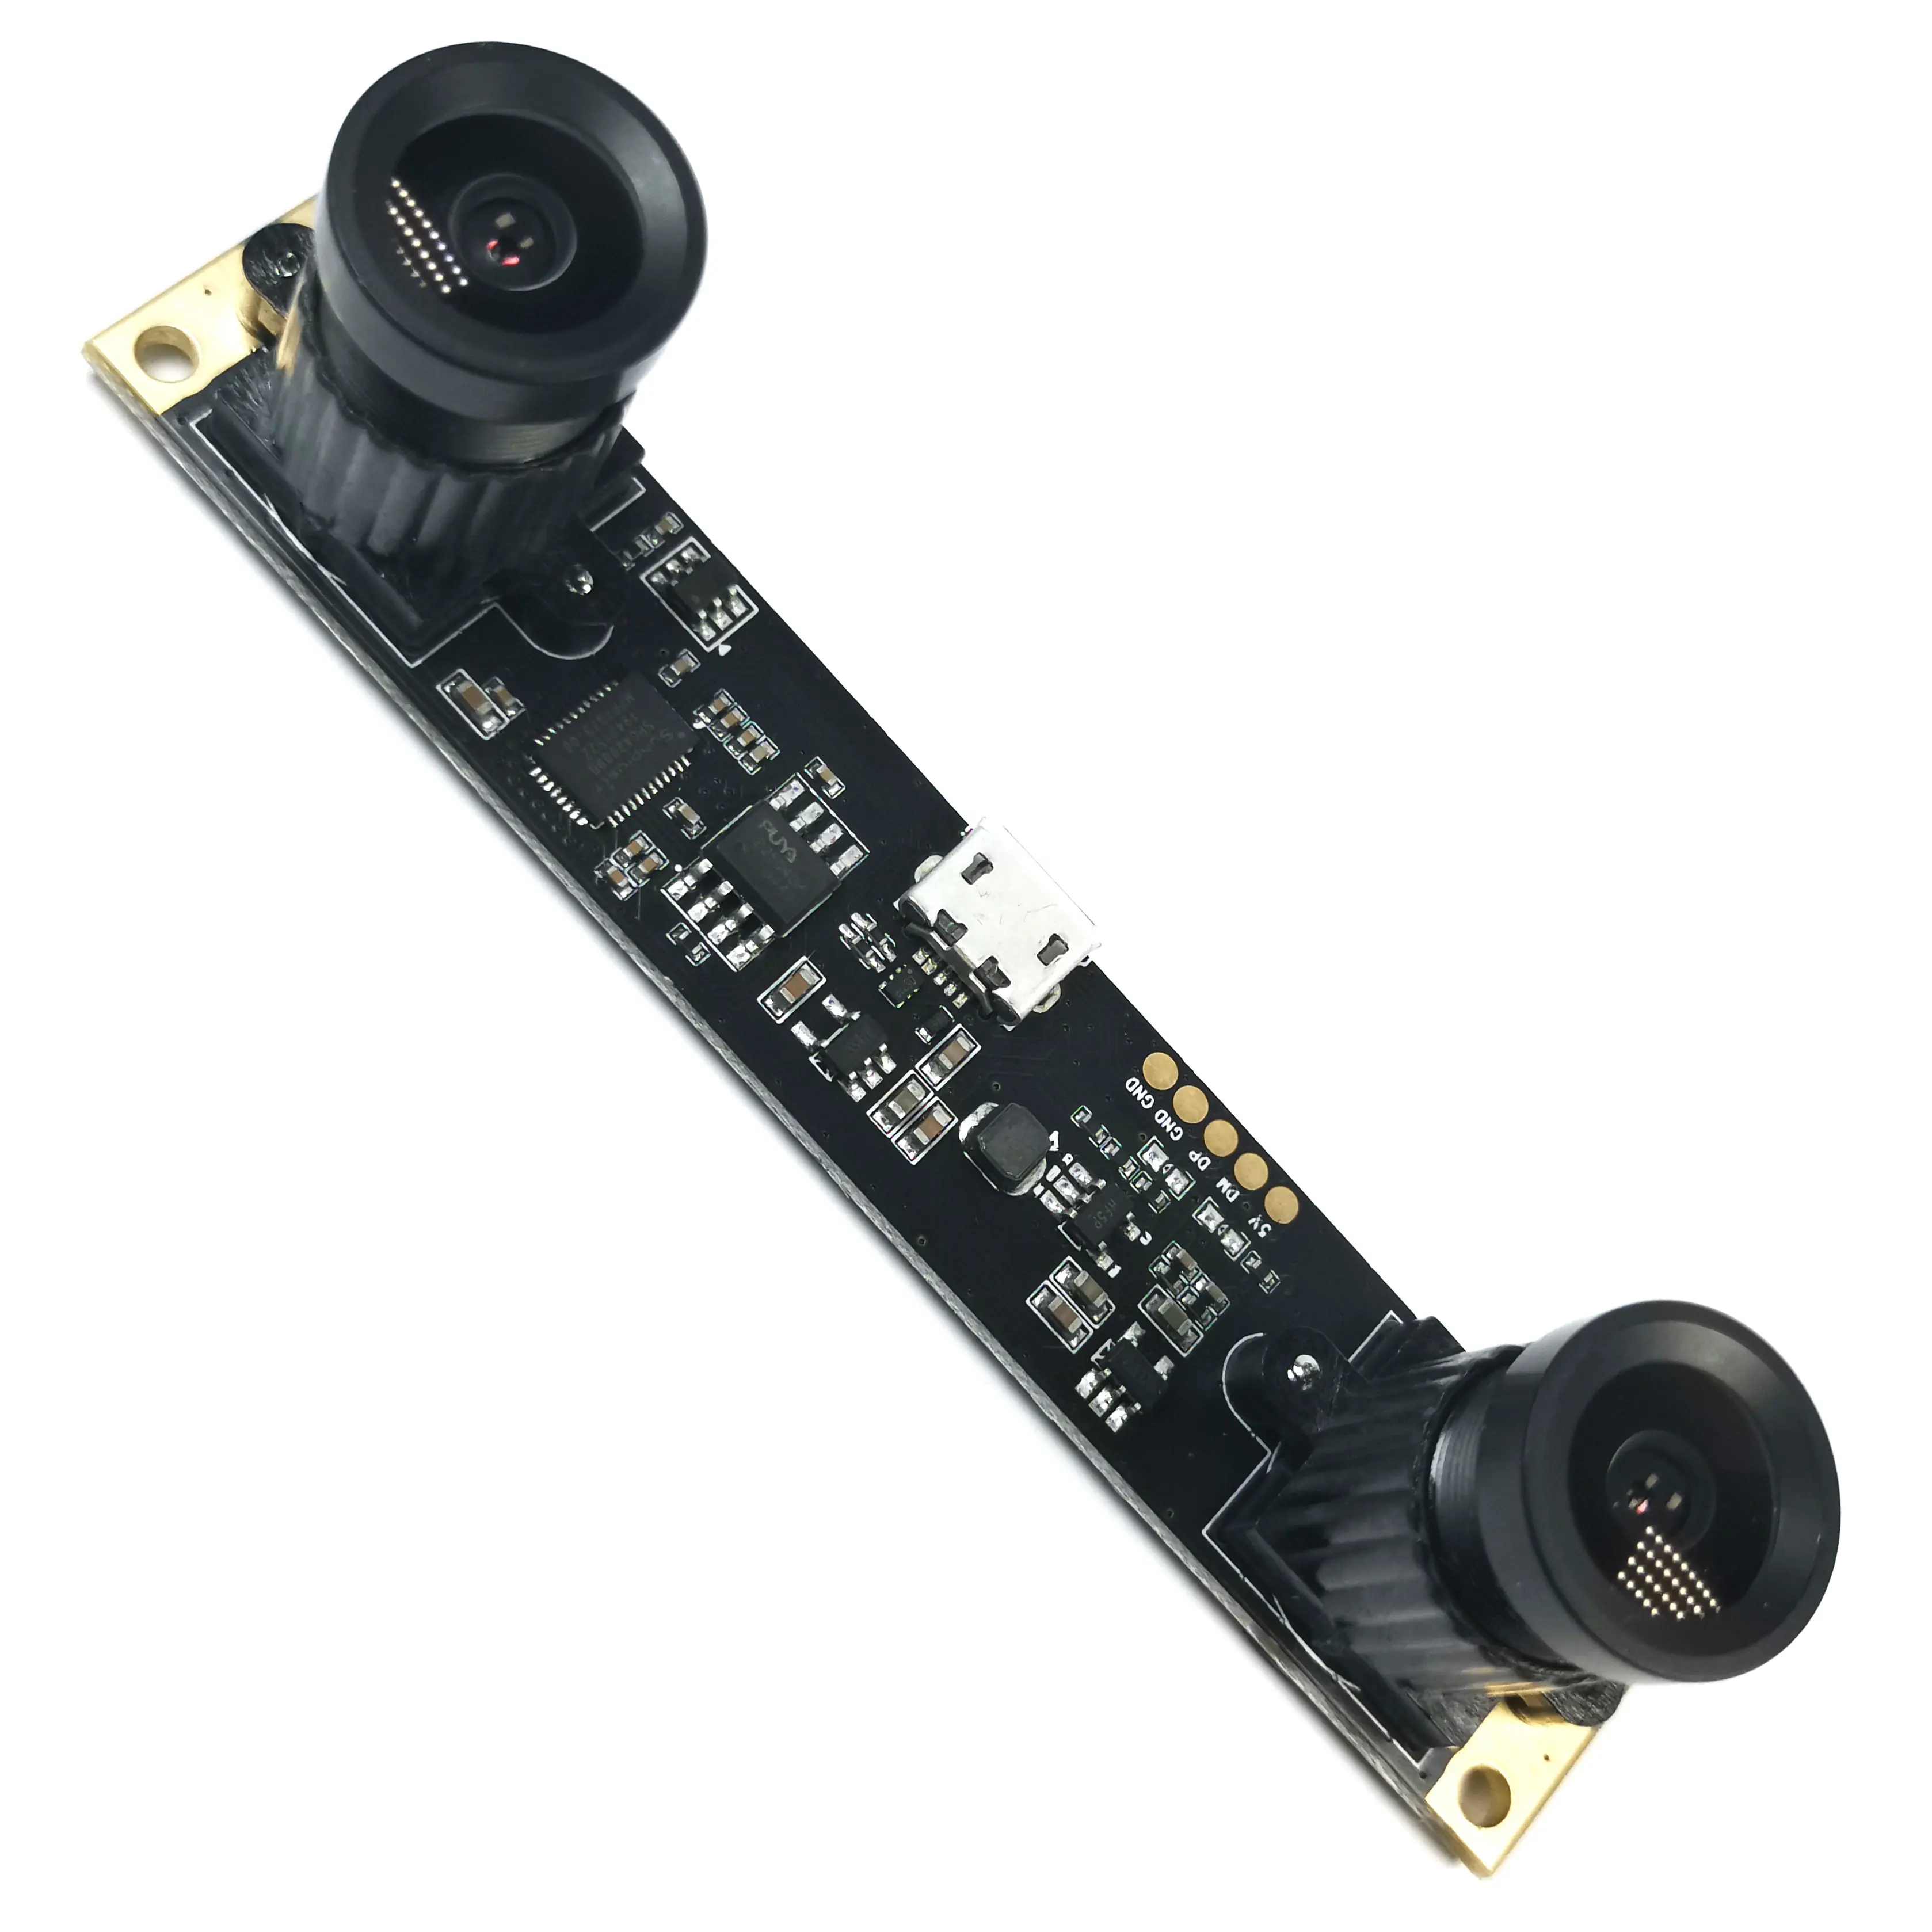 Usb Camera Module HD 720P Dual Lens USB Camera Module Synchronous USB Camera Module FF MF With Micro USB Interface